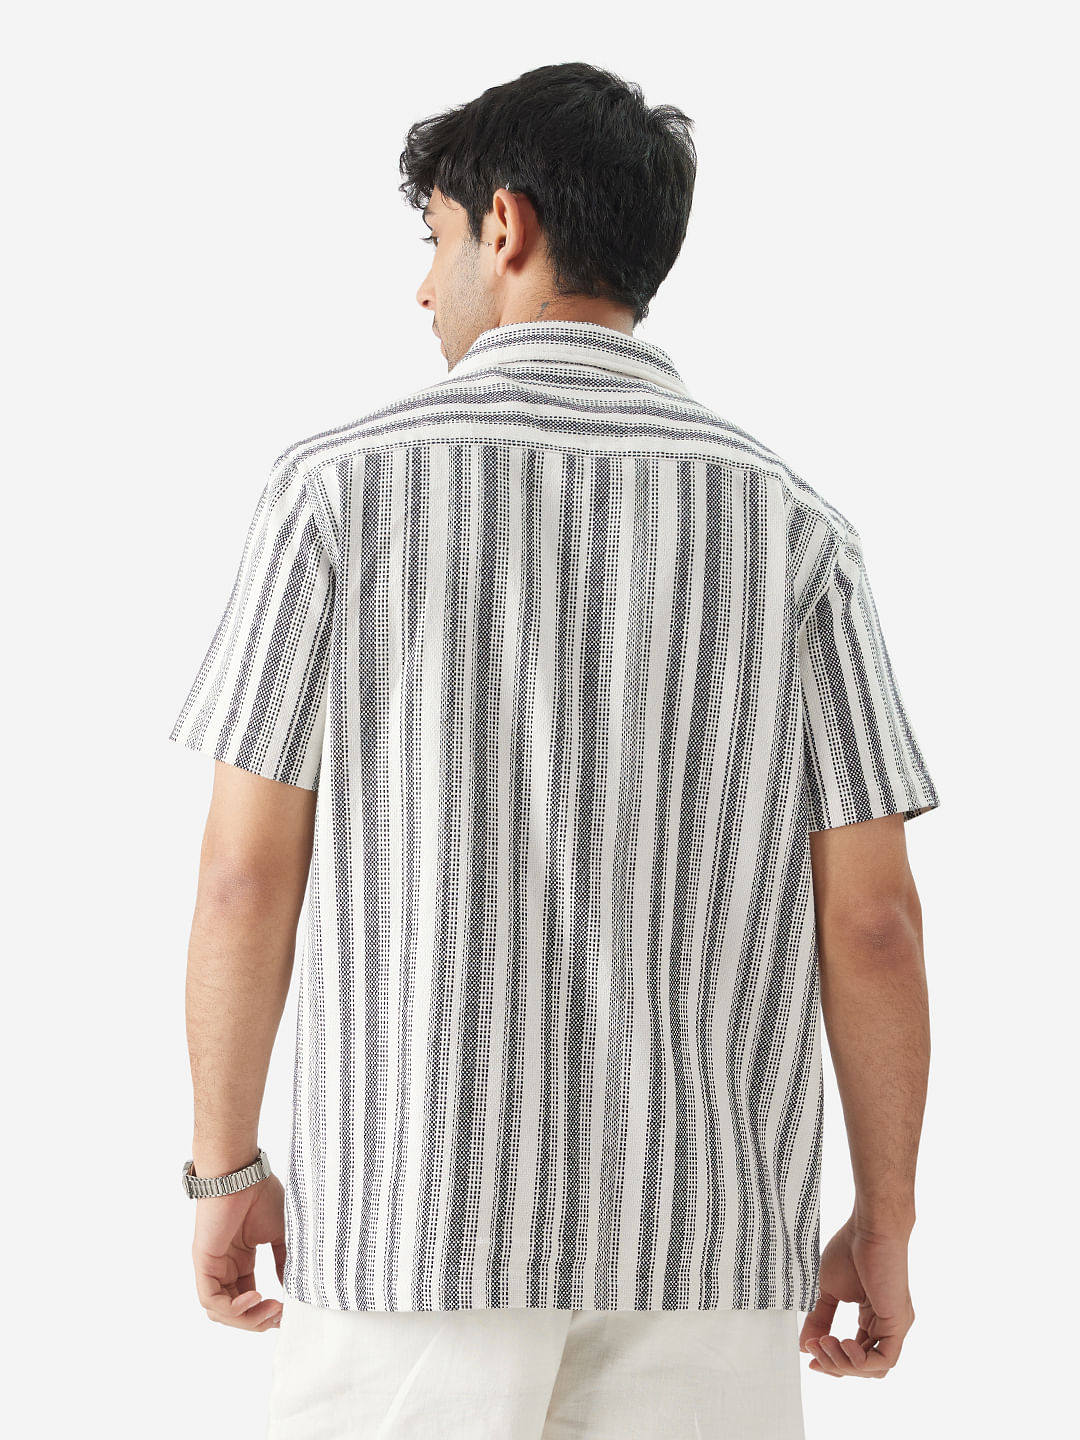 Buy TSS Originals: Monochrome Stripes Printed Shirts Online